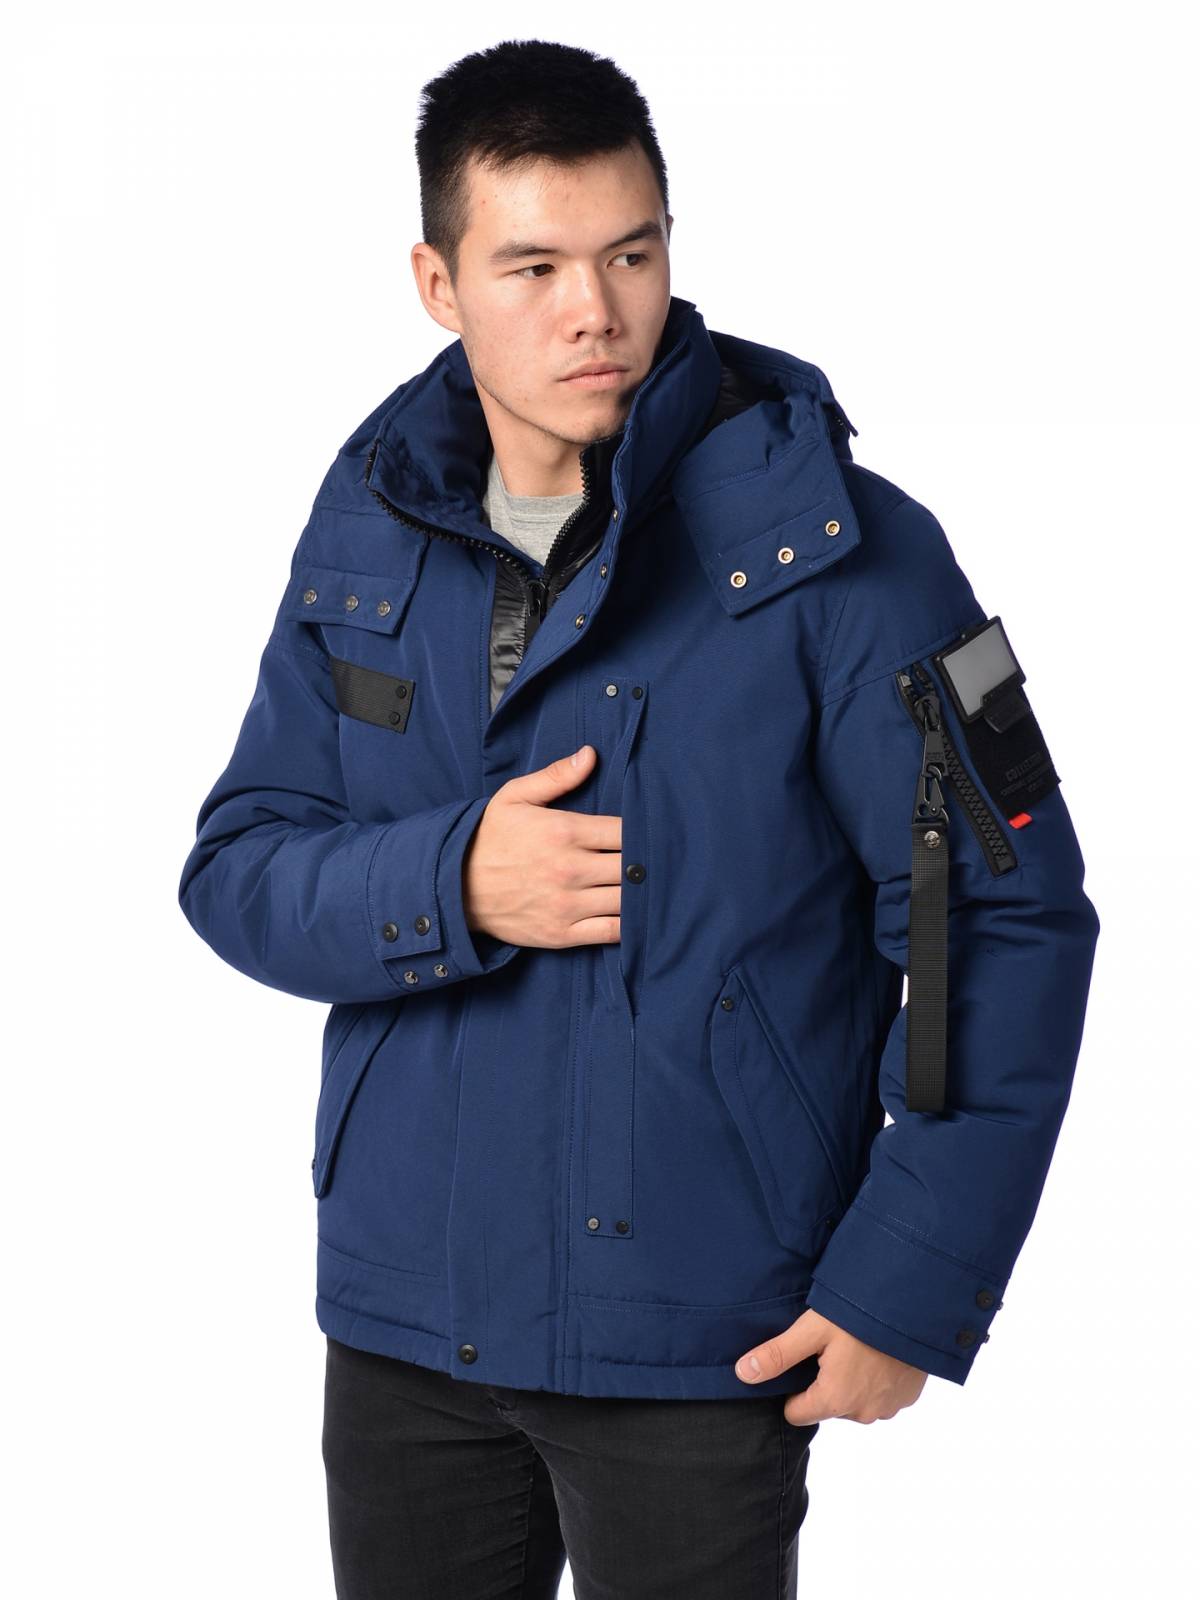 Зимняя куртка мужская Shark Force 3991 синяя 50 RU